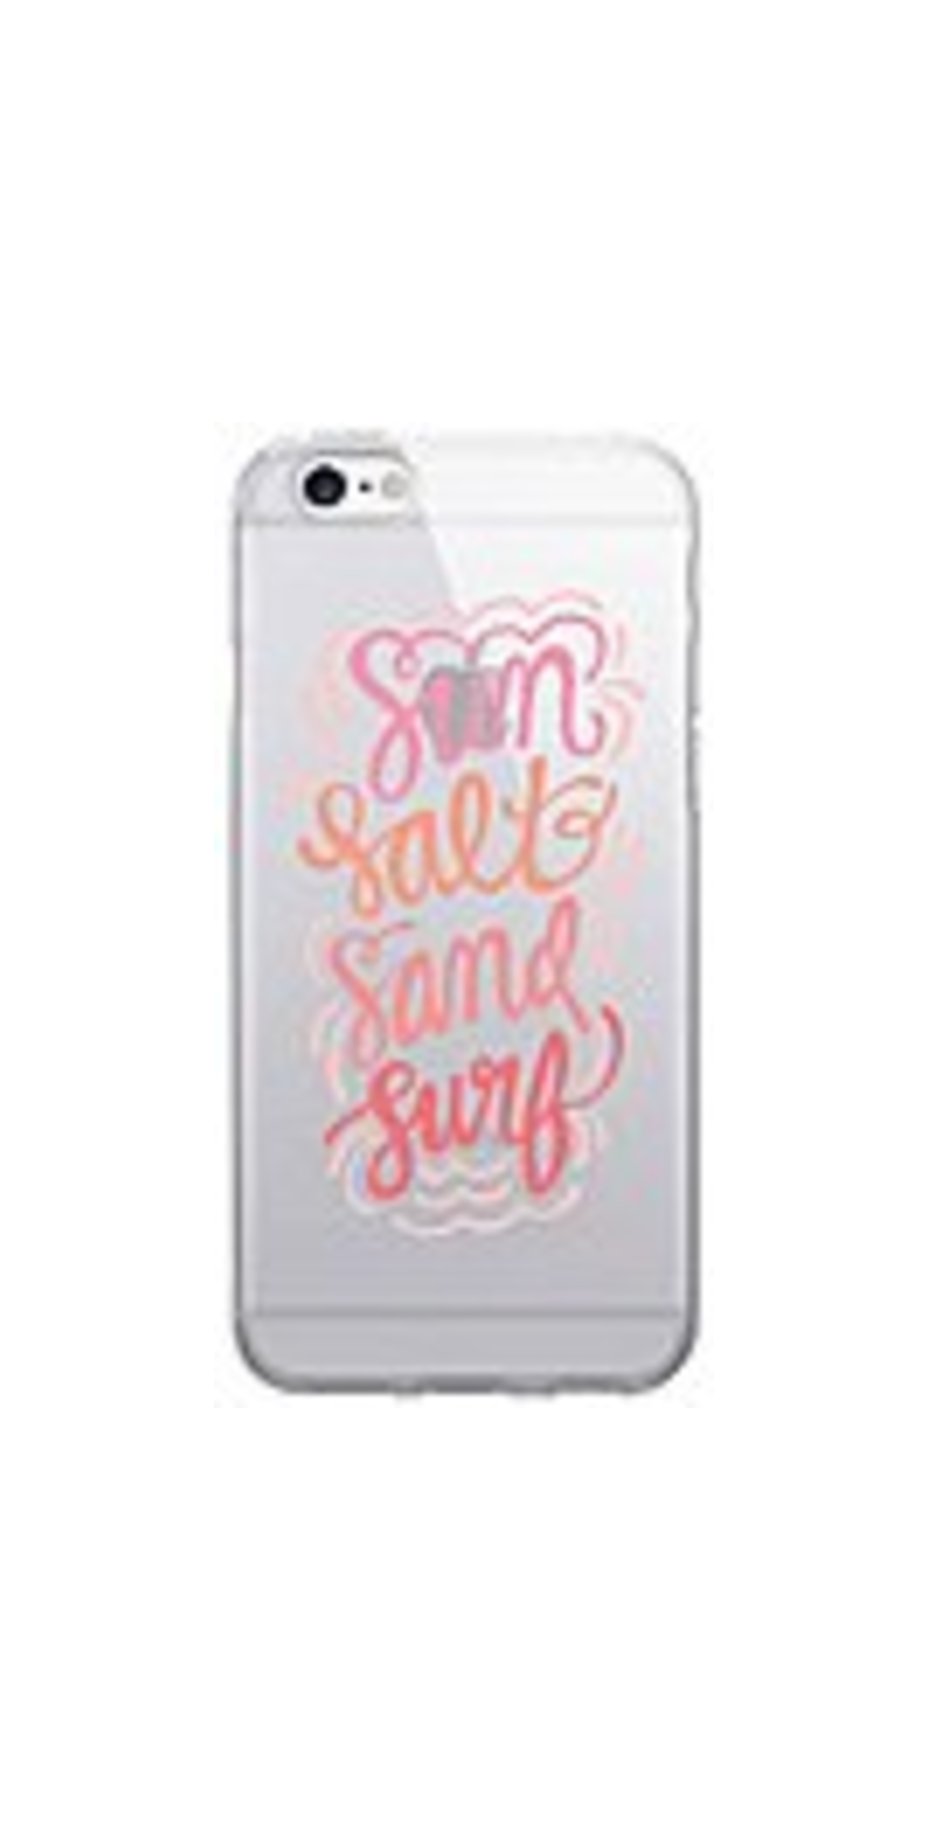 OTM Prints Clear Phone Case, Sun Salt Sand Surf Pink - iPhone 7/7S - For iPhone 7 - Sun Salt Sand Surf Pink - Clear - Wear Resistant, Tear Resistant